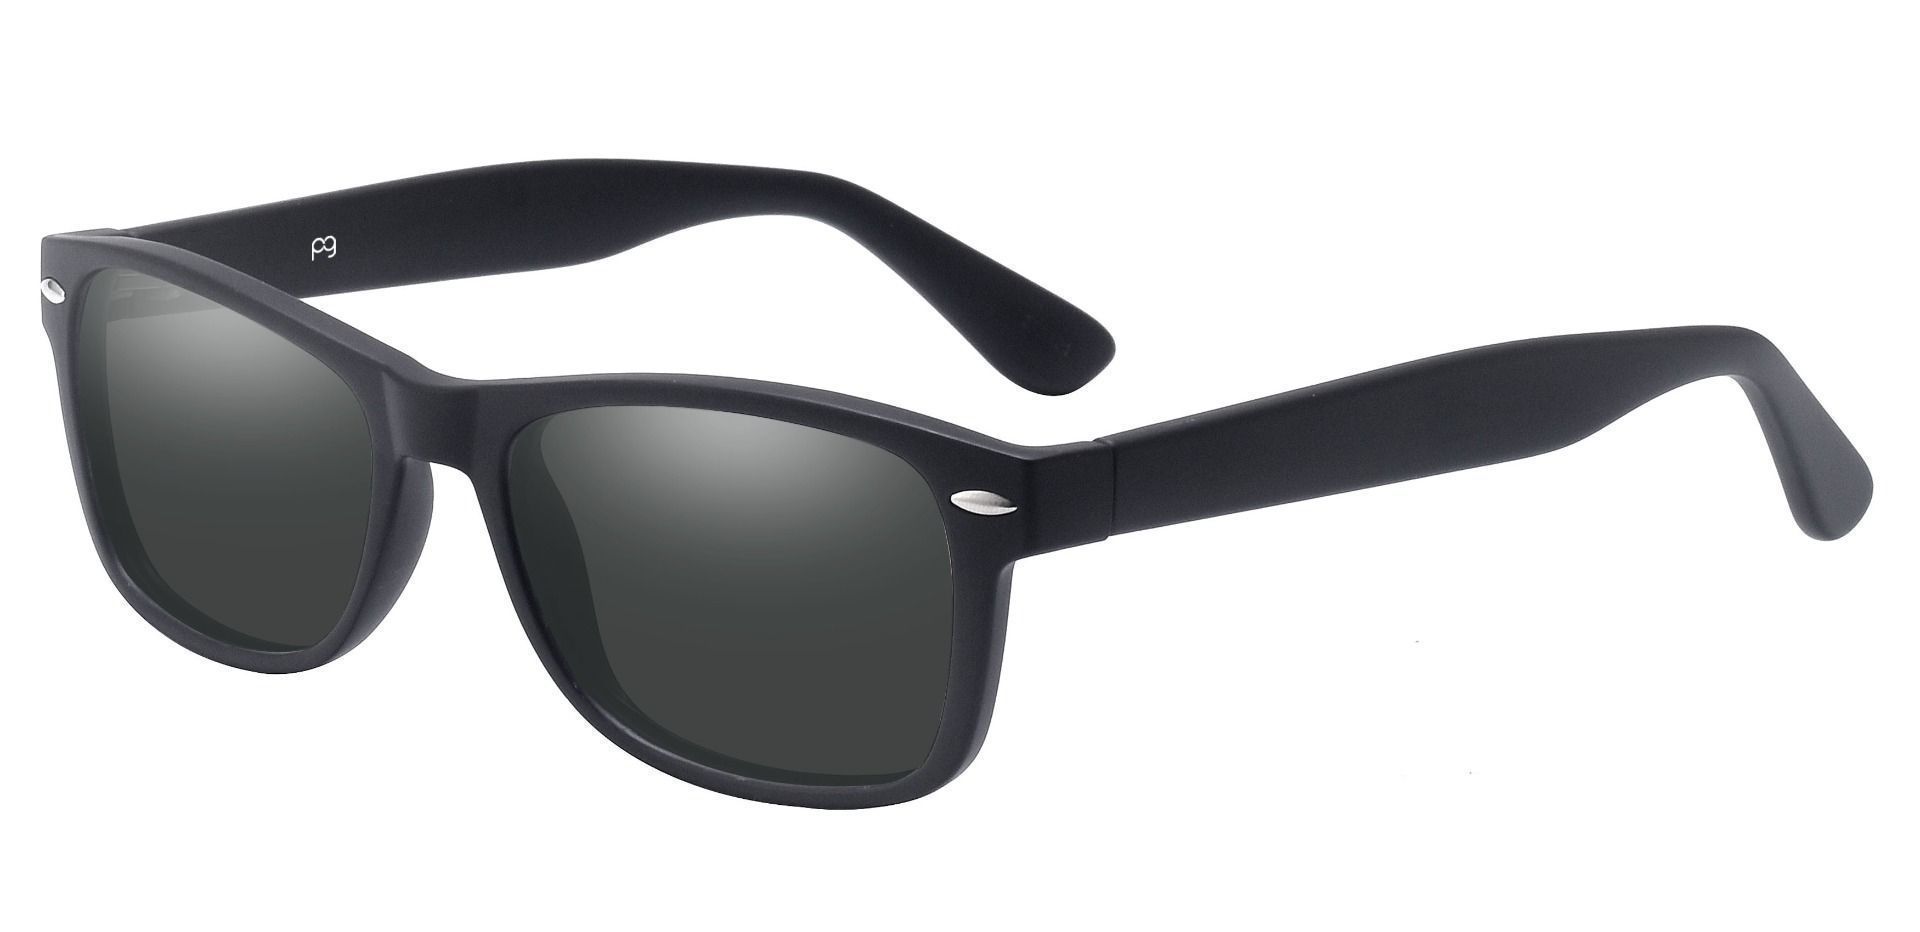 Kent Rectangle Lined Bifocal Sunglasses - Black Frame With Gray Lenses